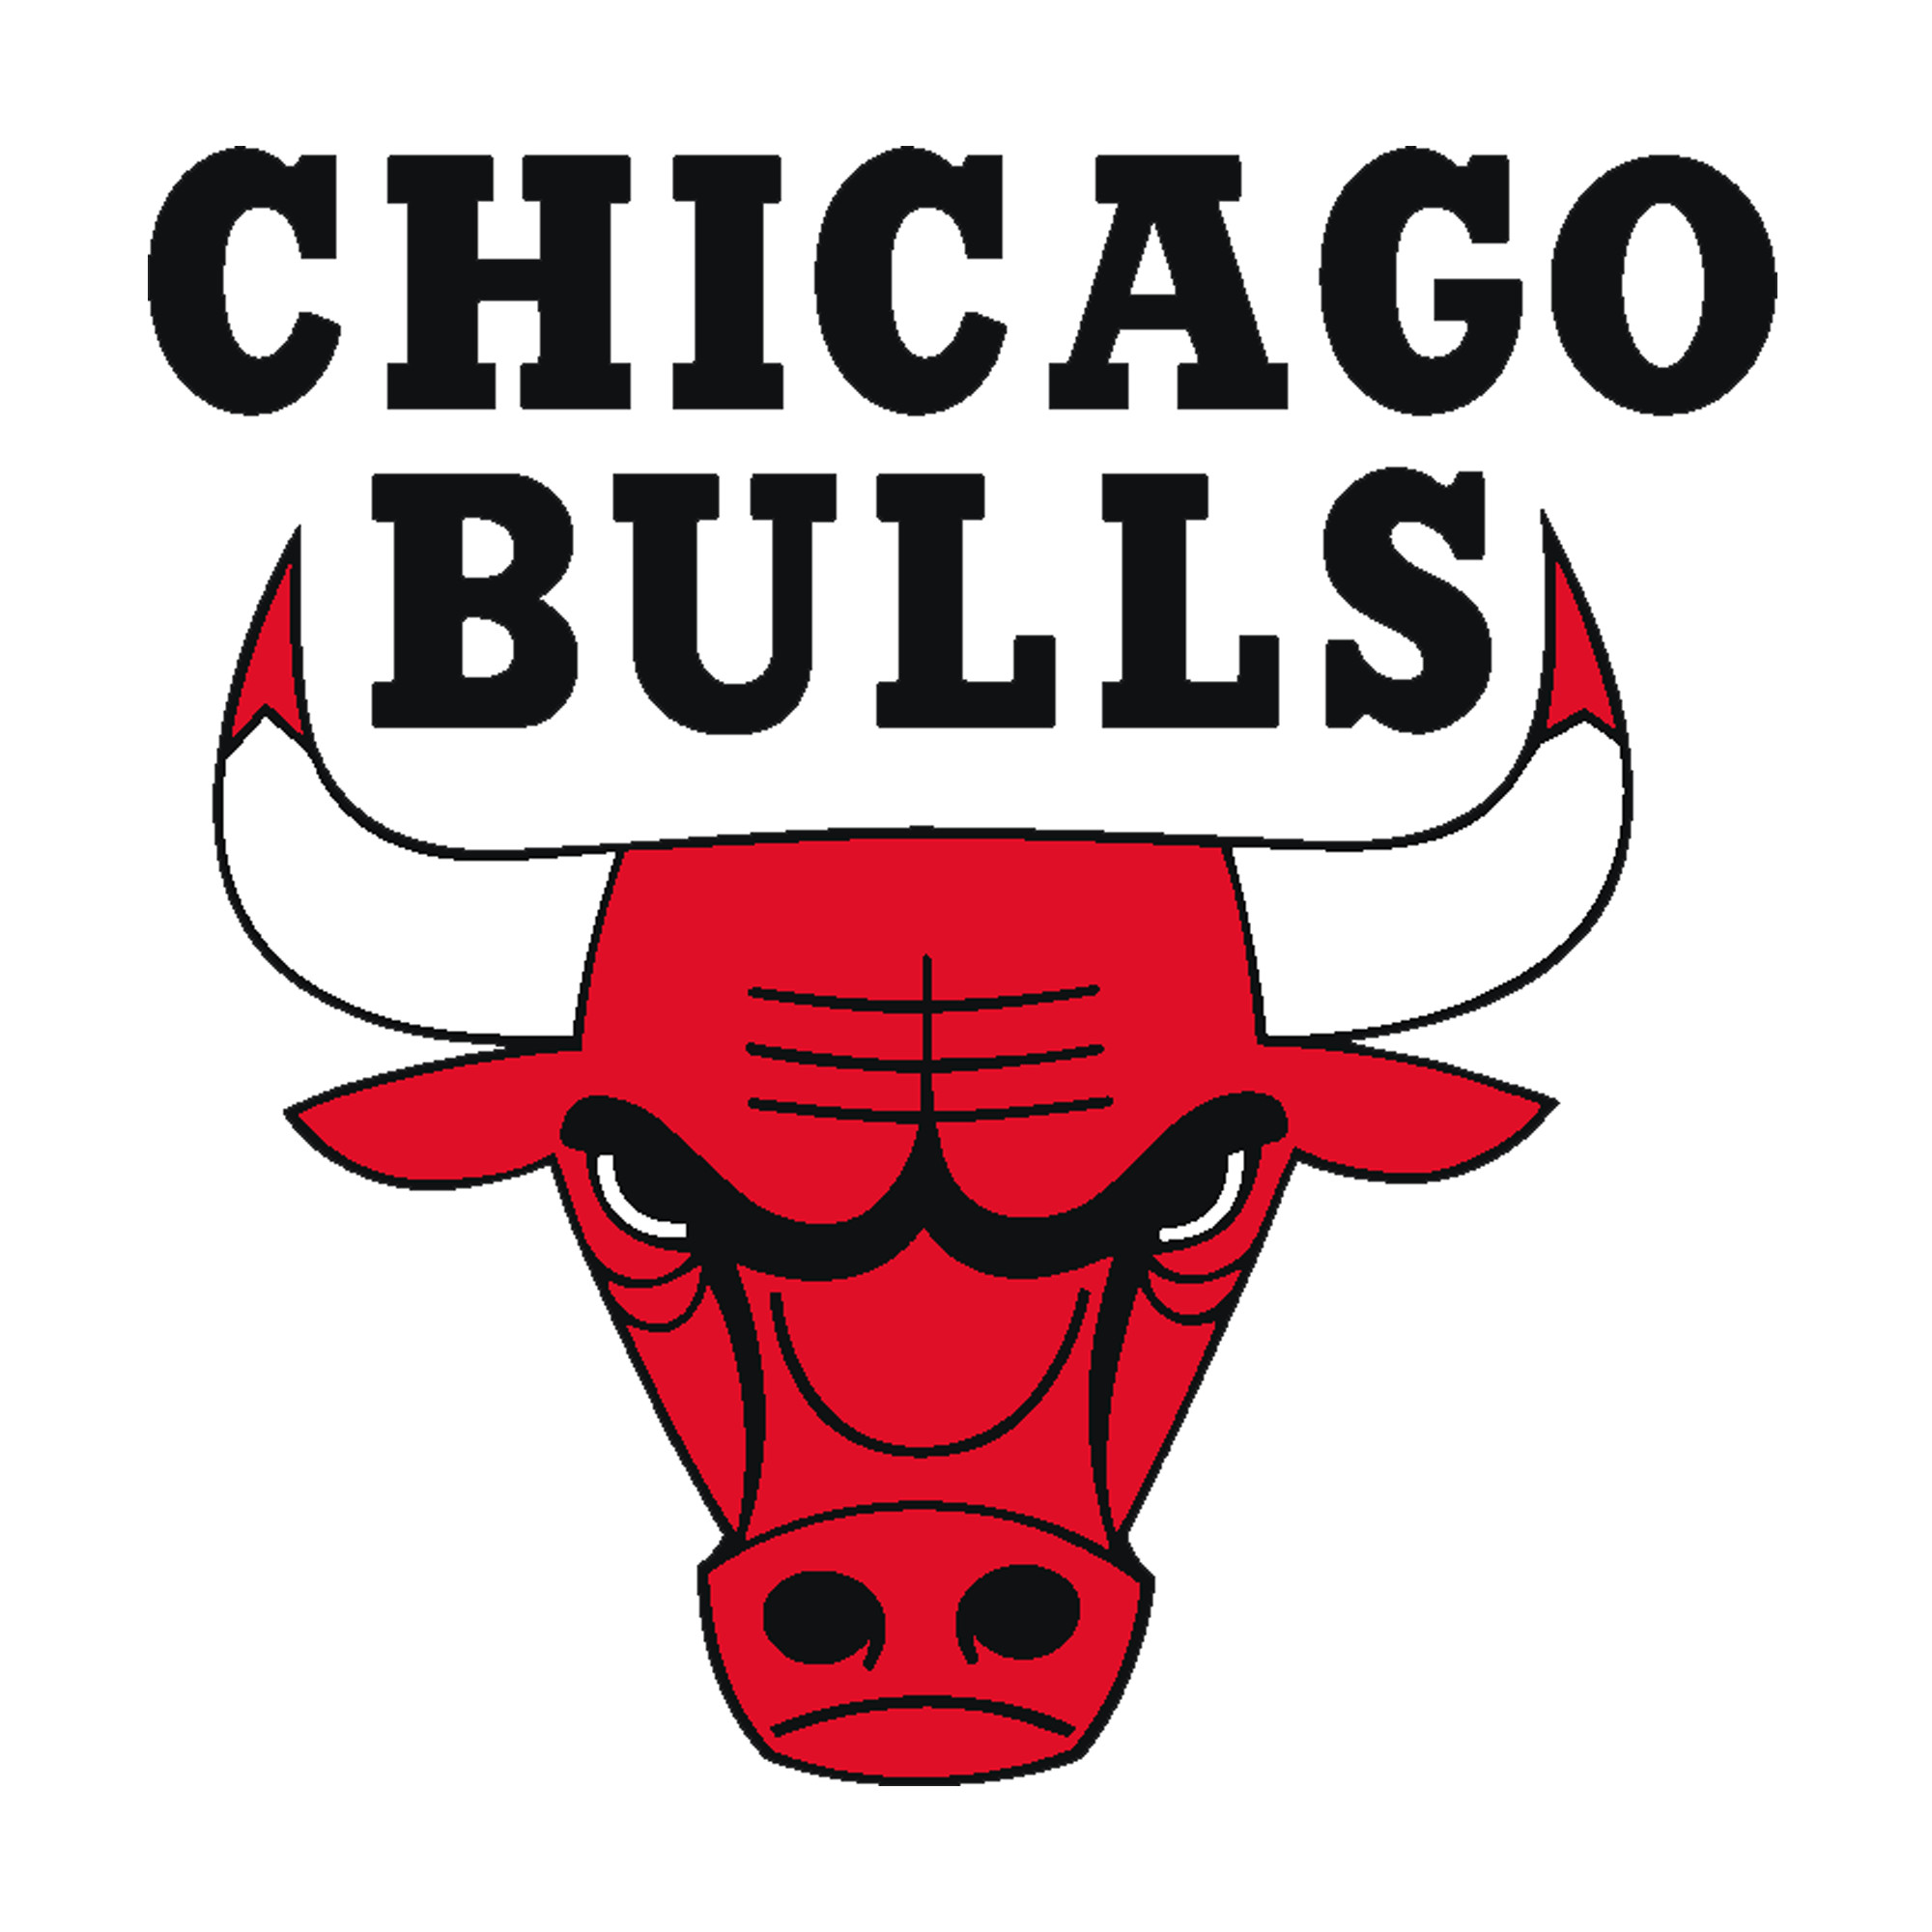 Chicago bulls logo wallpapers